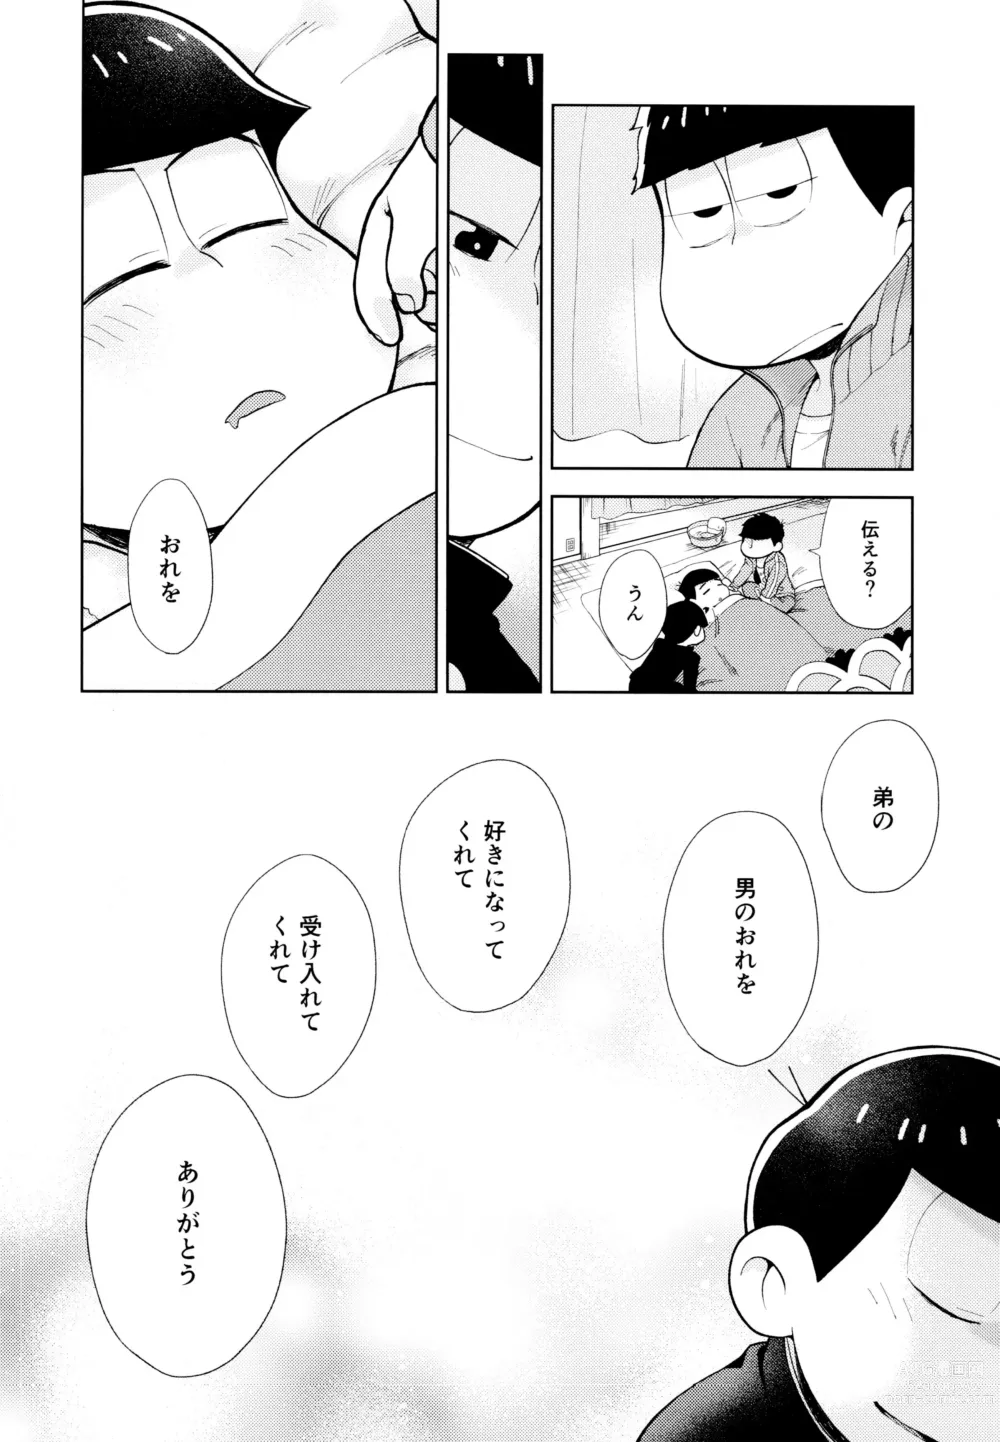 Page 51 of doujinshi Chotto Abunai Time Slip